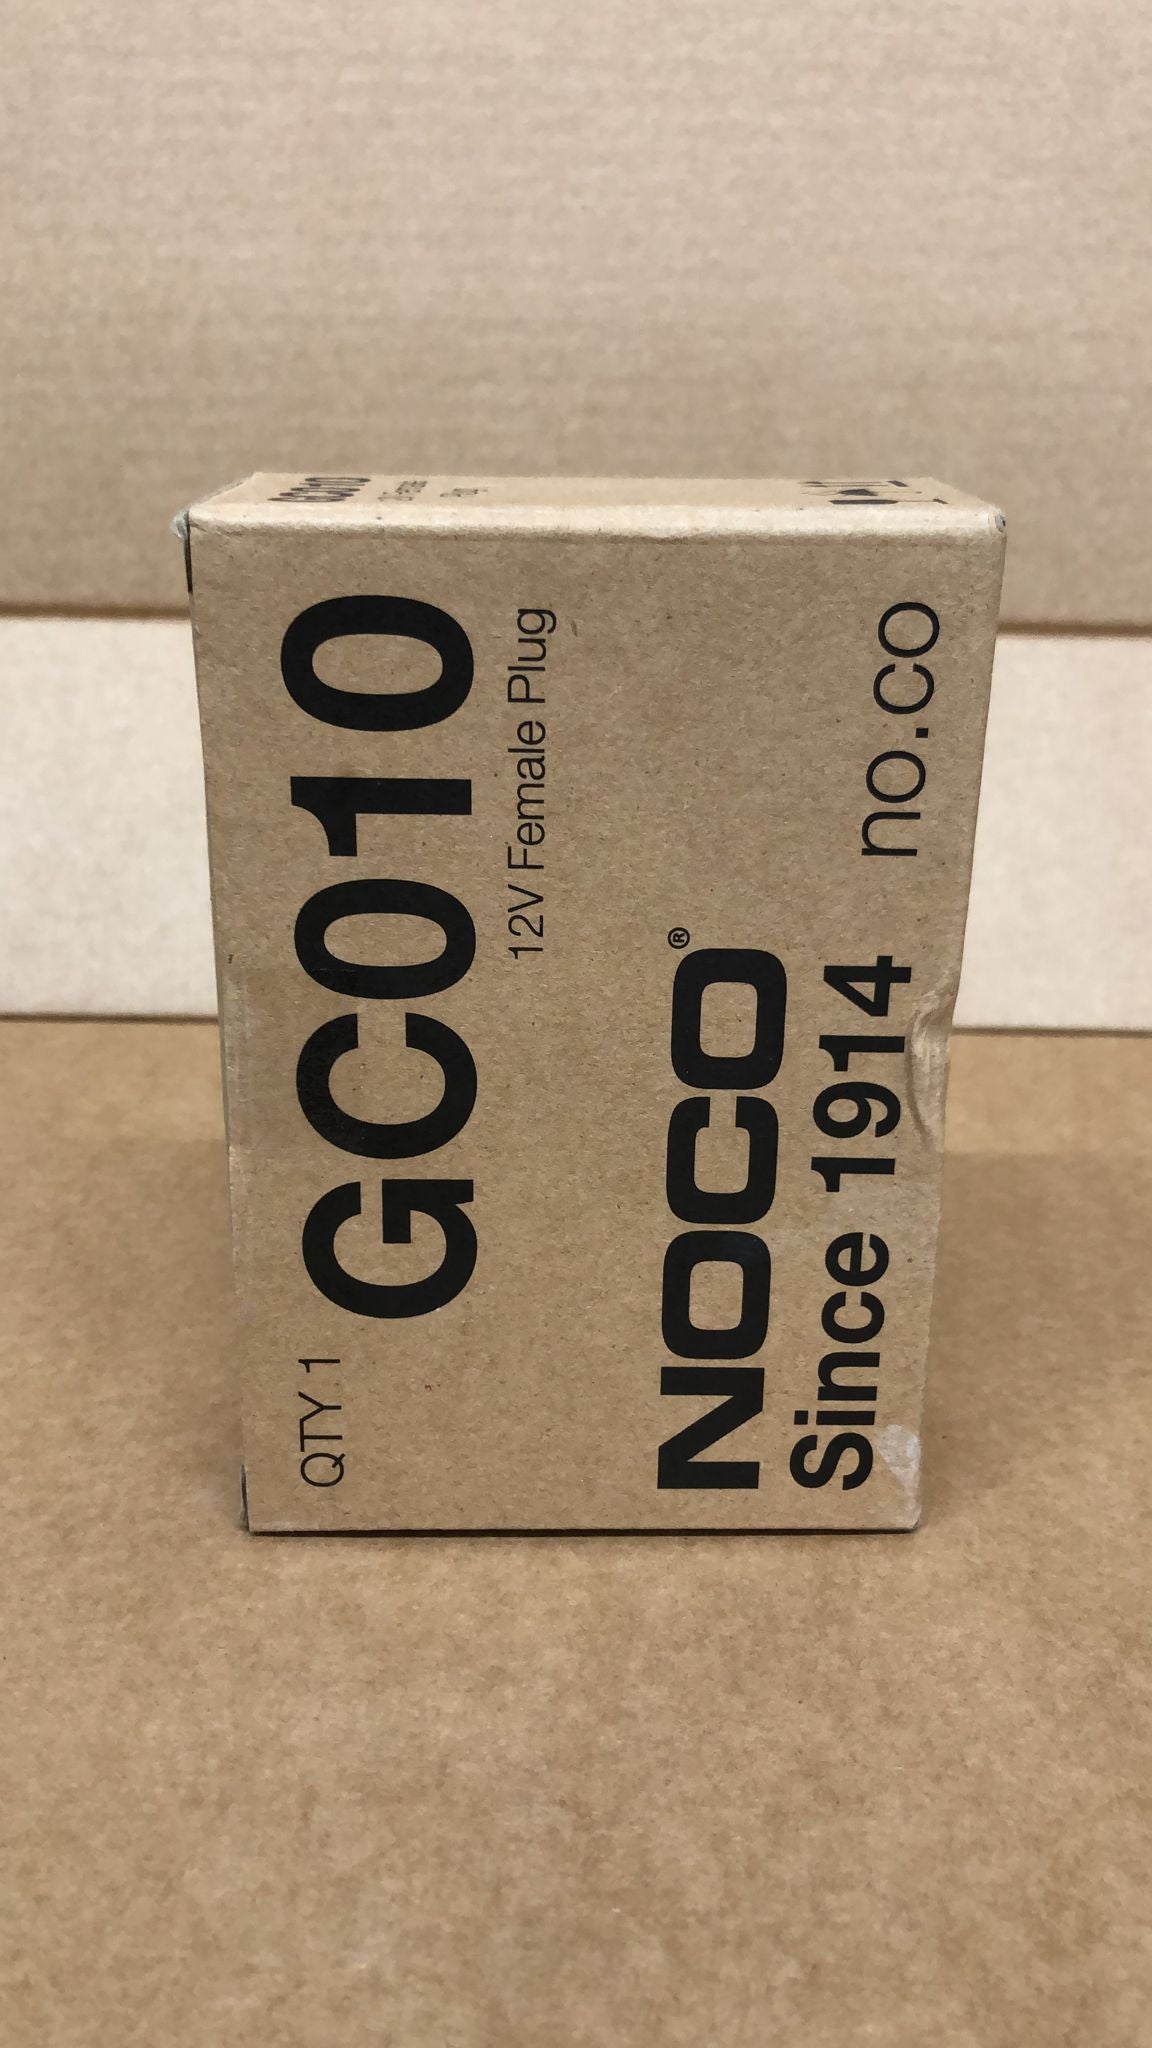 NOCO GC010 X-Connect 12V Female Plug-0431